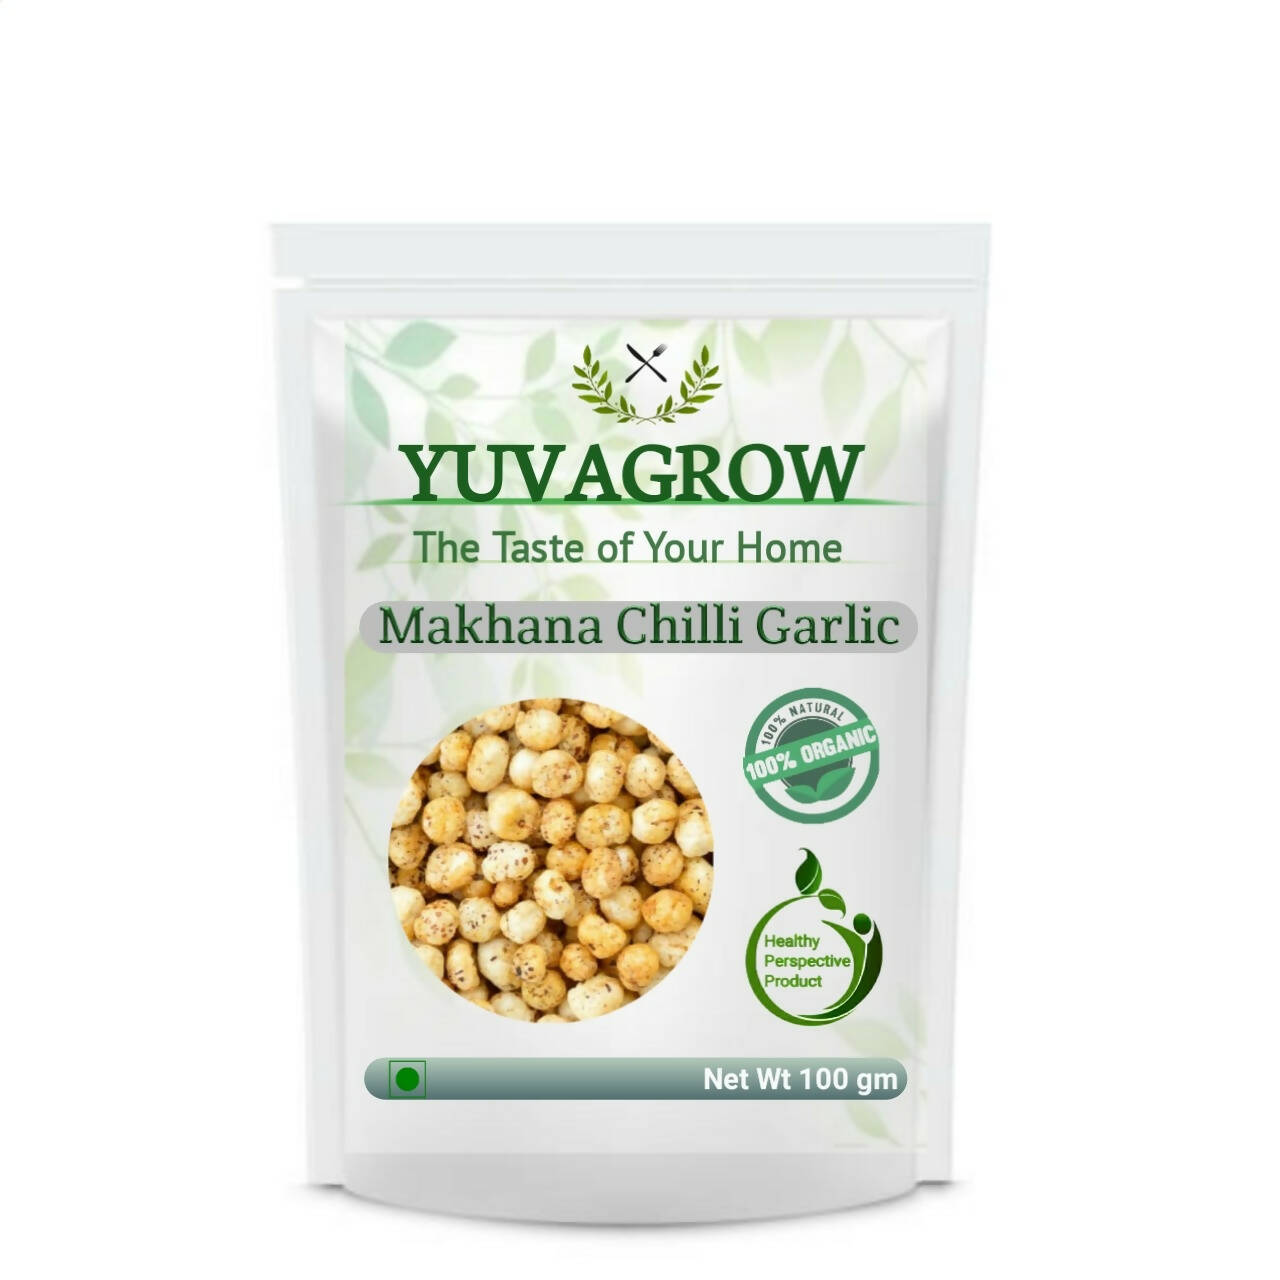 Yuvagrow Makhana Chilli Garlic - buy in USA, Australia, Canada